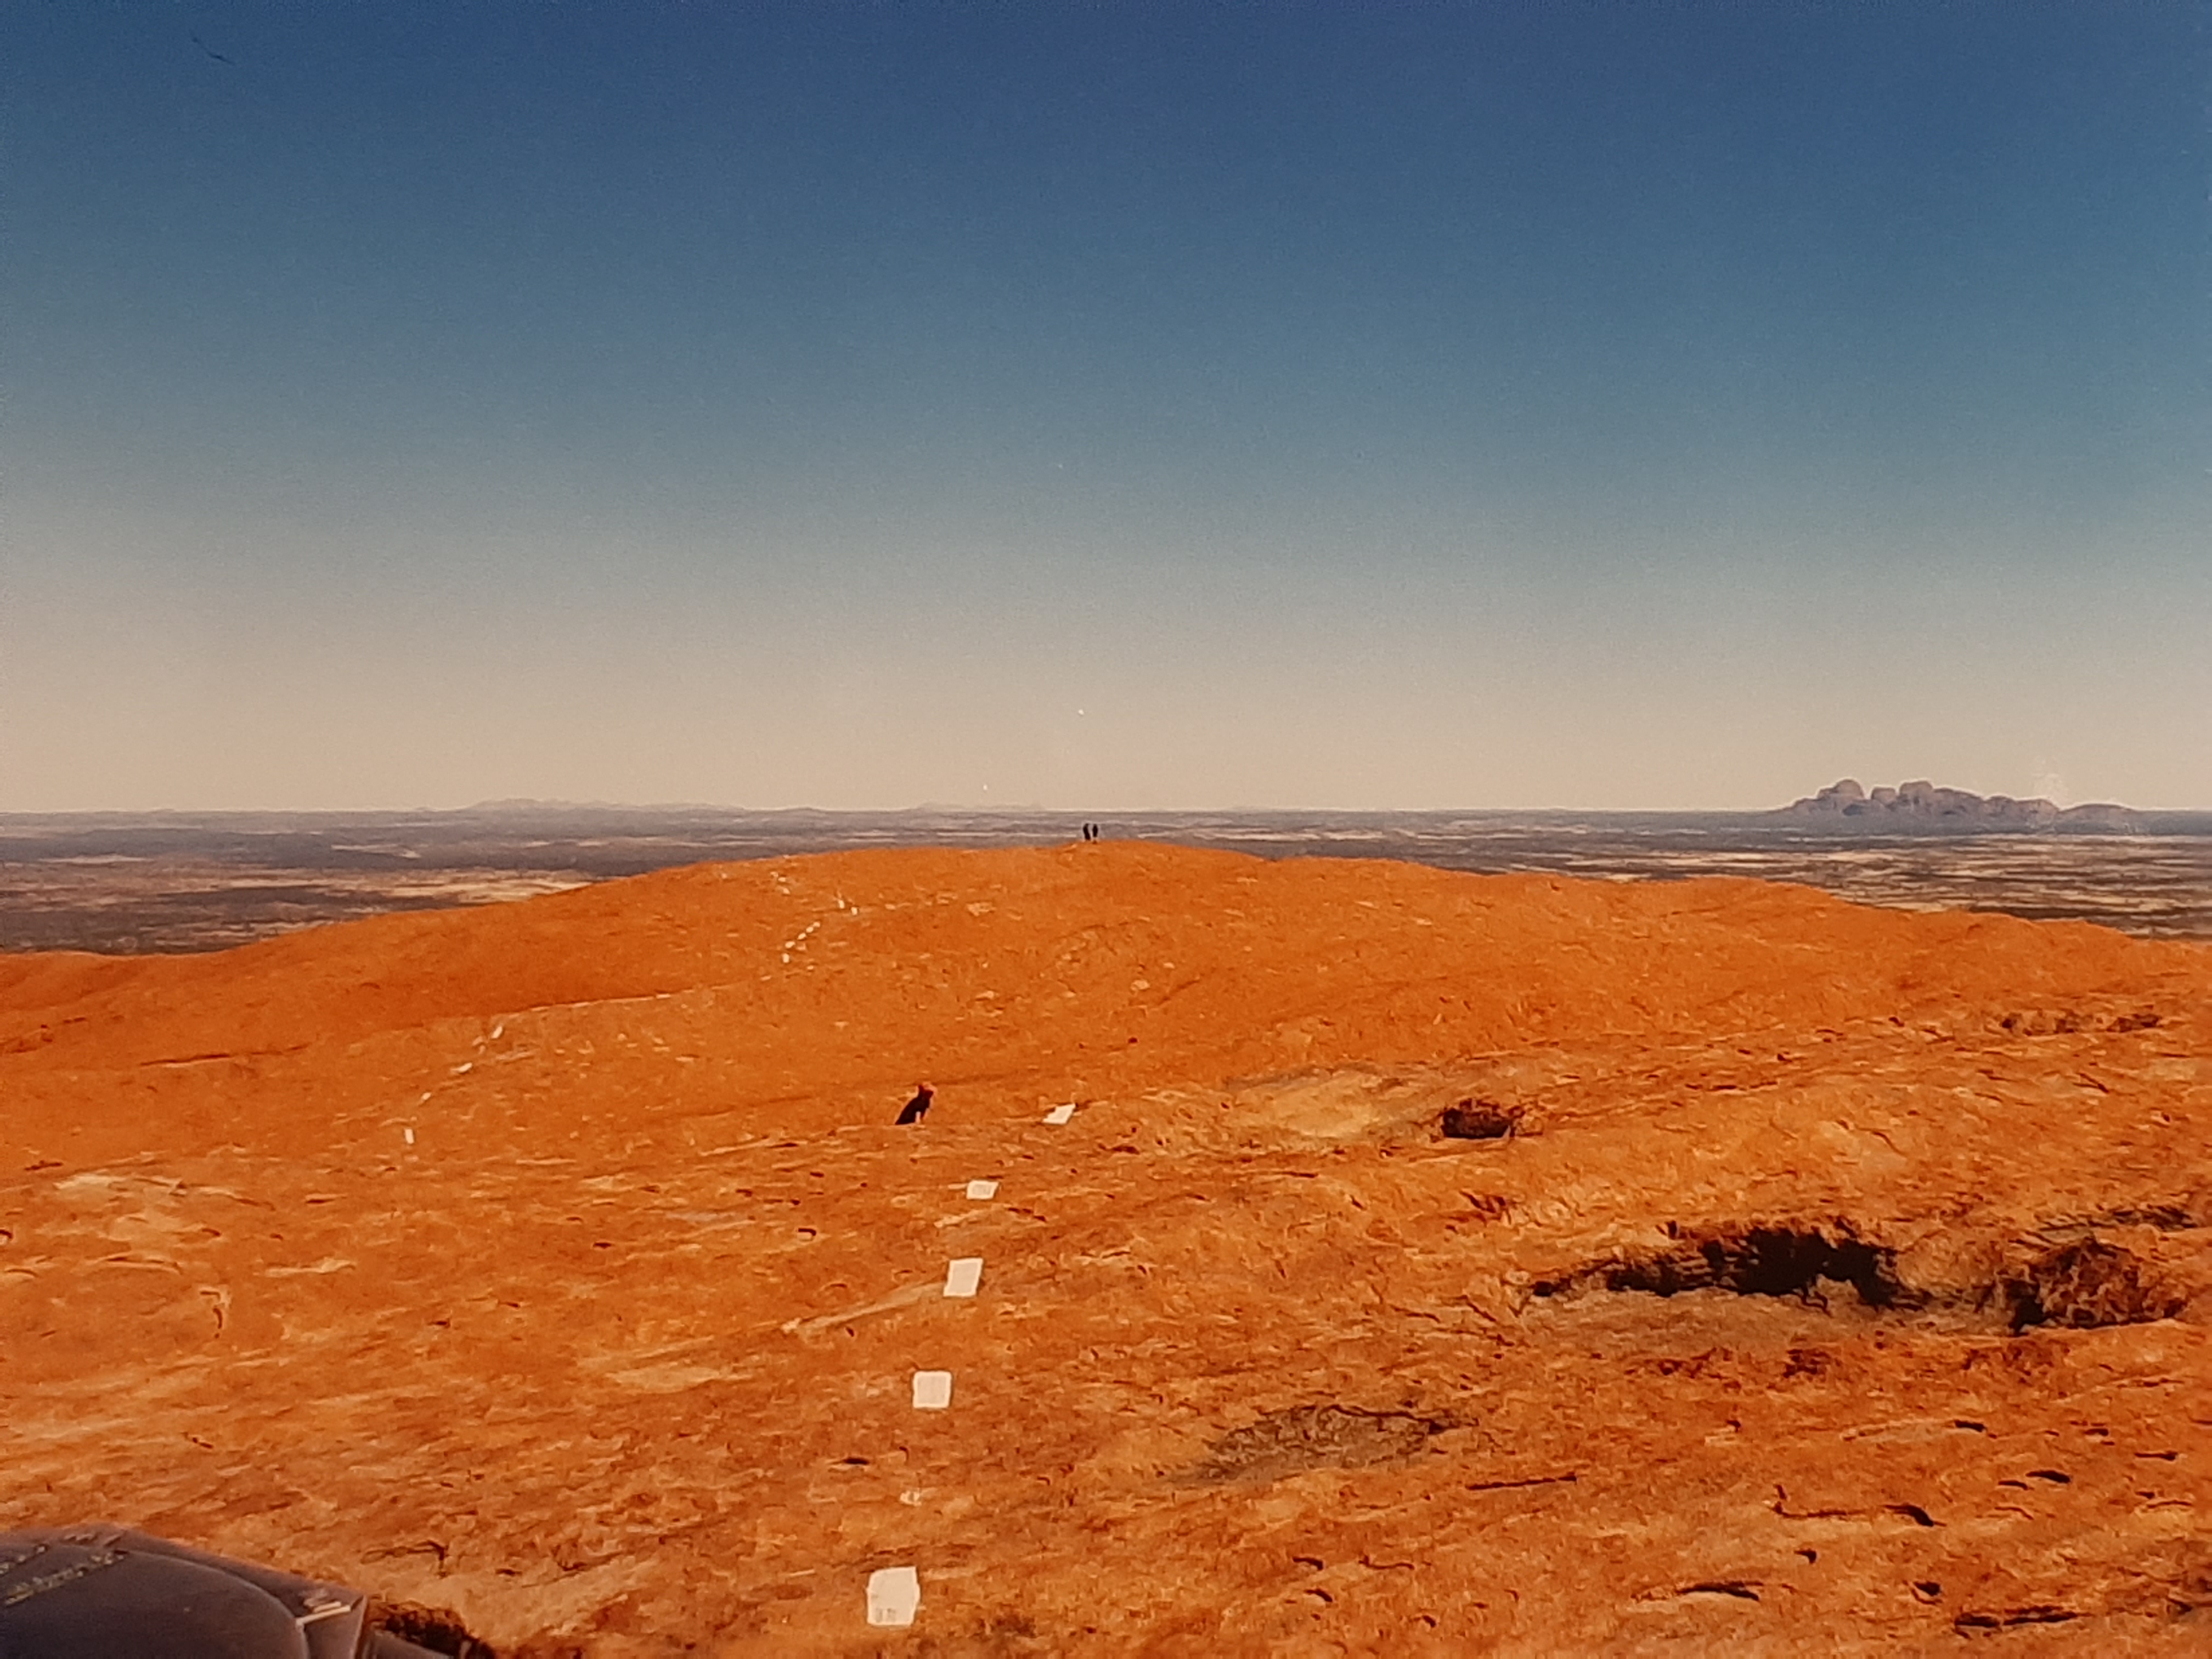 Ayers Rock - Uluru - Australia - Outback